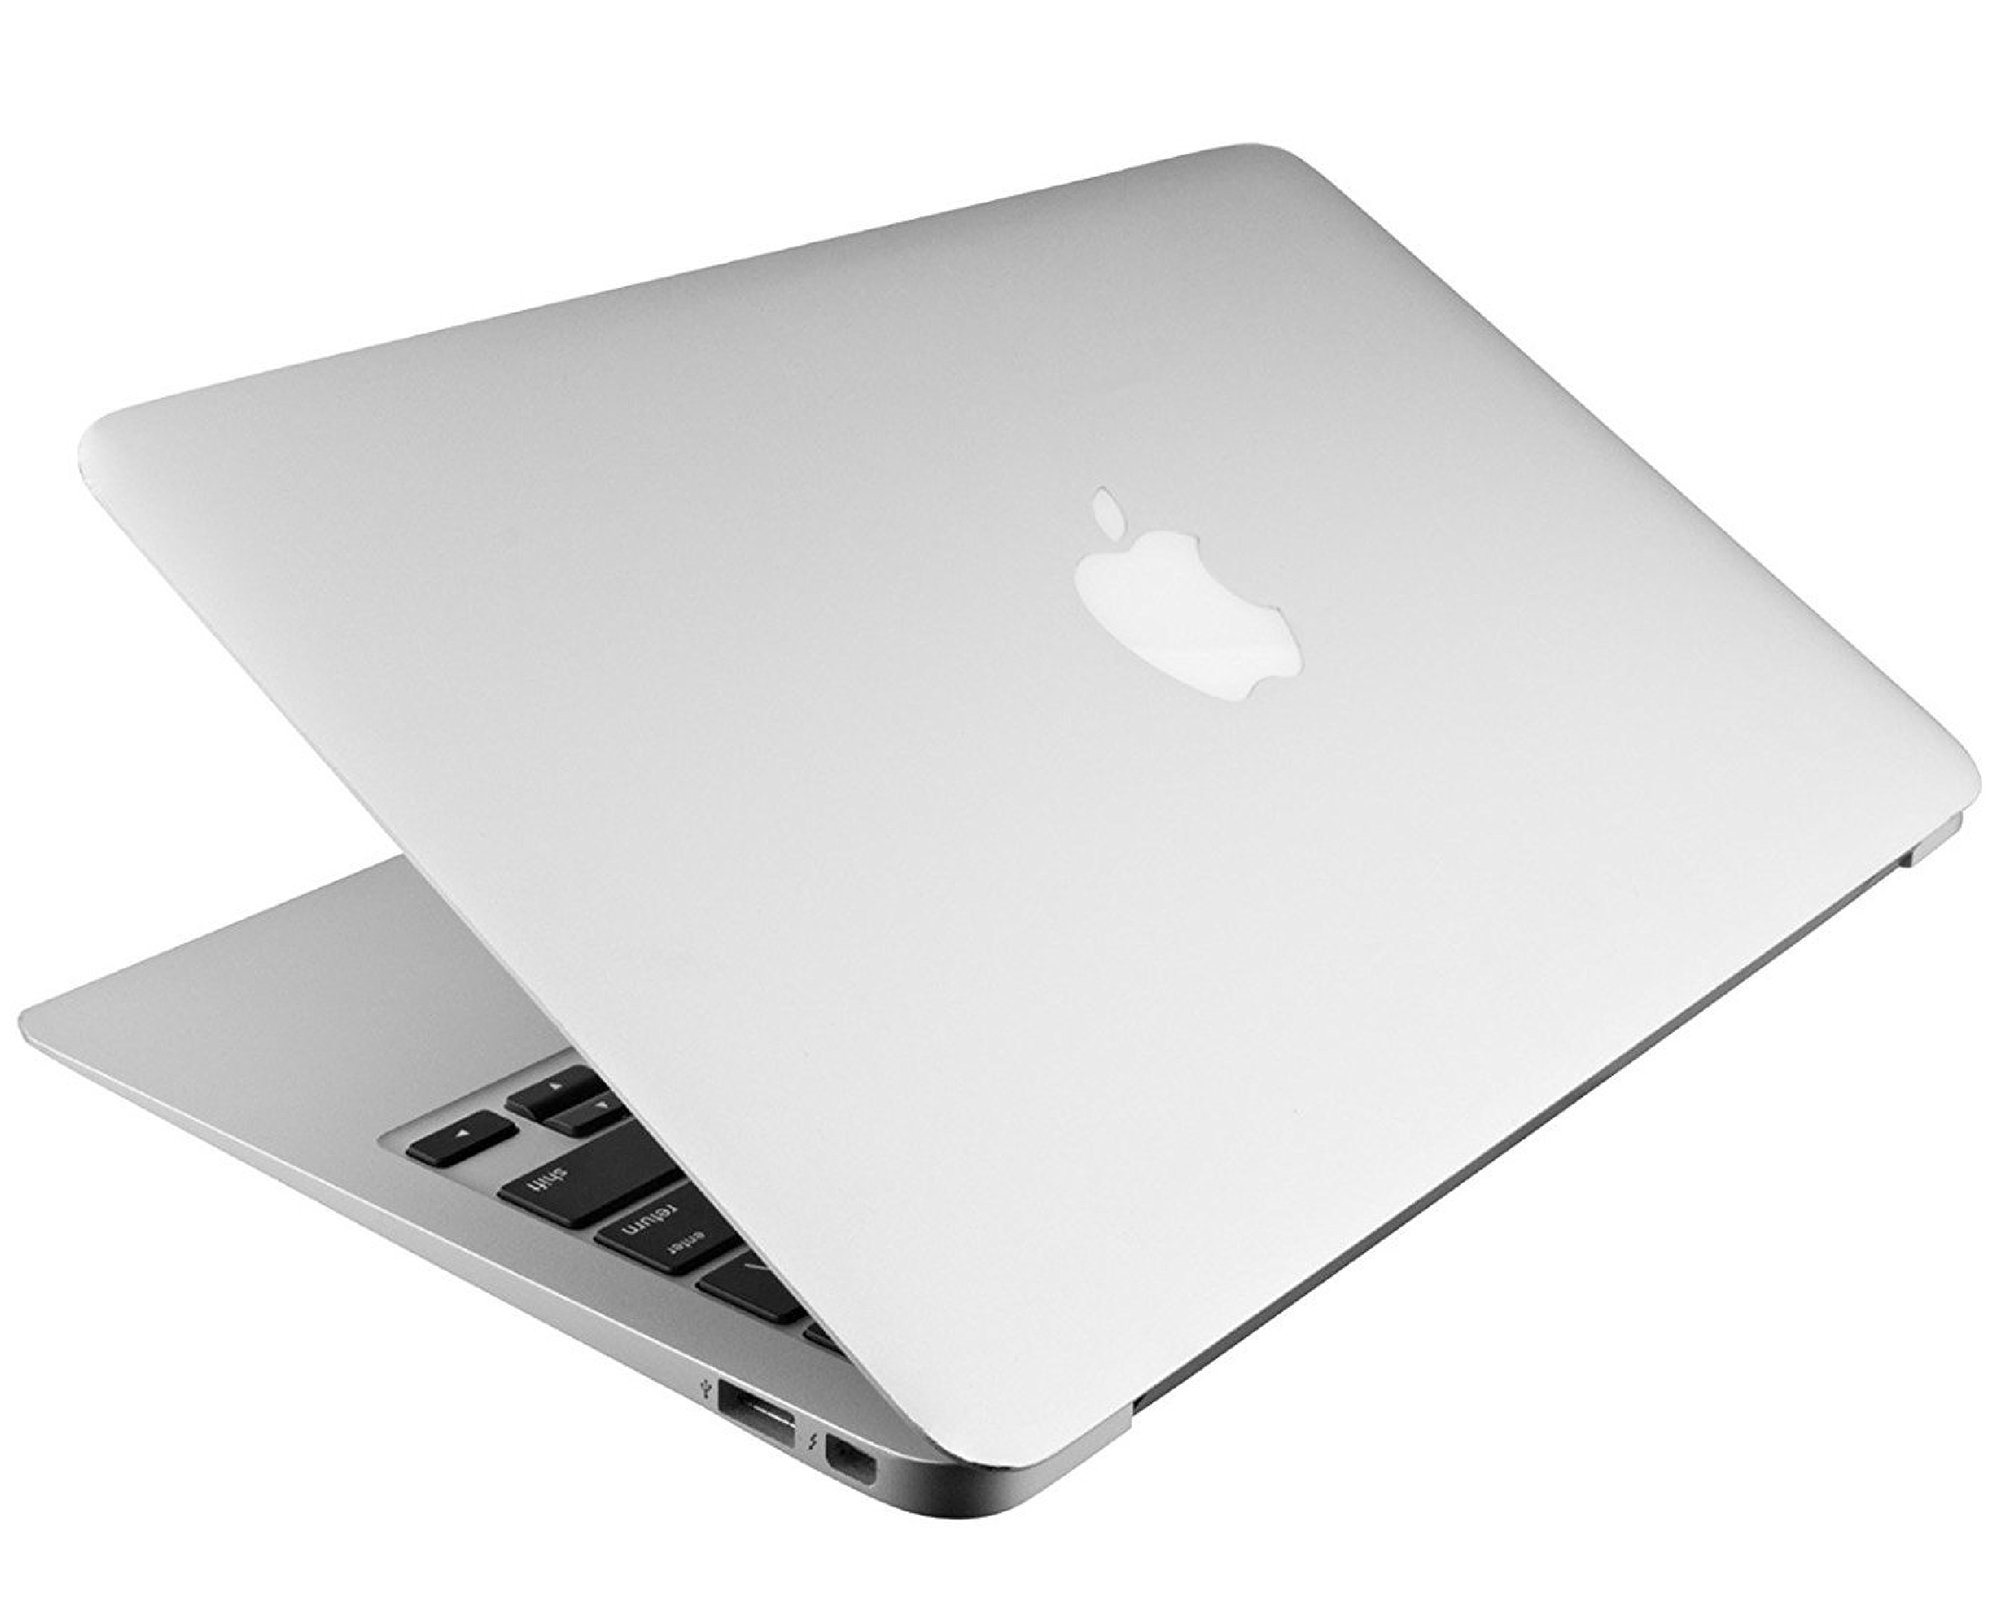 Restored Apple MacBook Air, 11.6" Laptop, Intel Core i5, 4GB RAM, 128GB SSD, No, Mac OS, Silver, MJVM2LL/A (Refurbished) - image 3 of 6